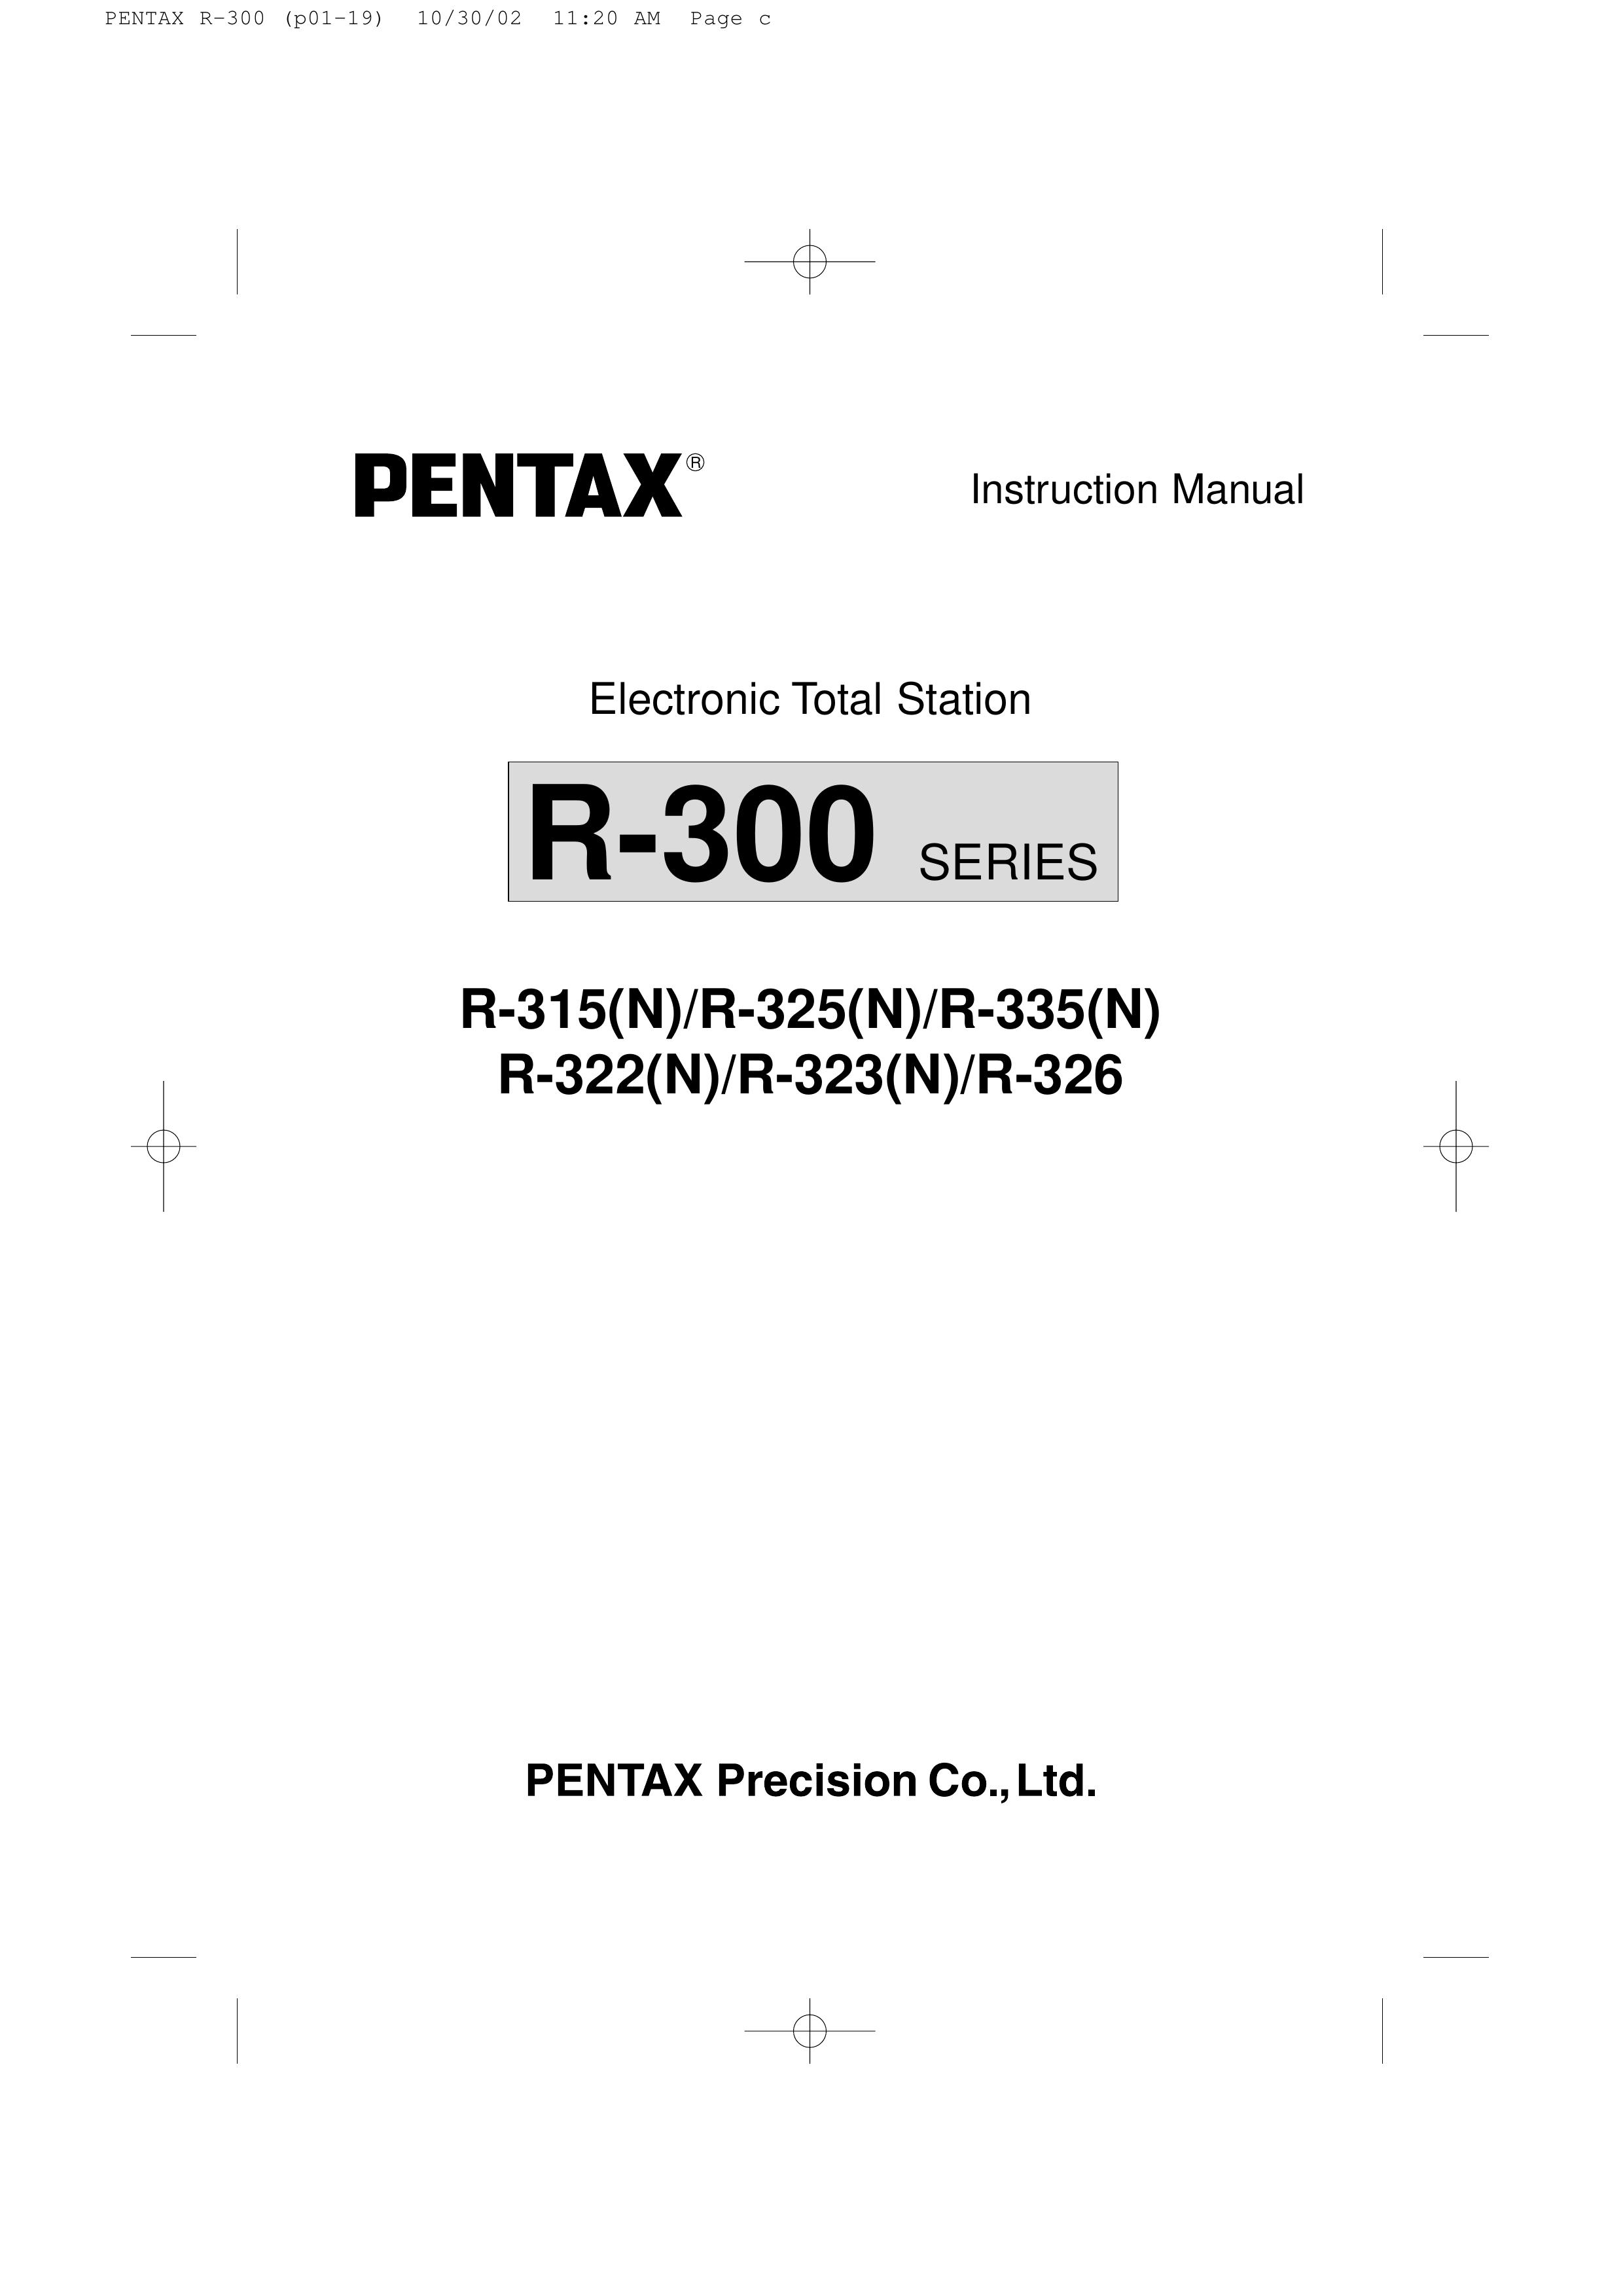 Pentax R-326 Telescope User Manual